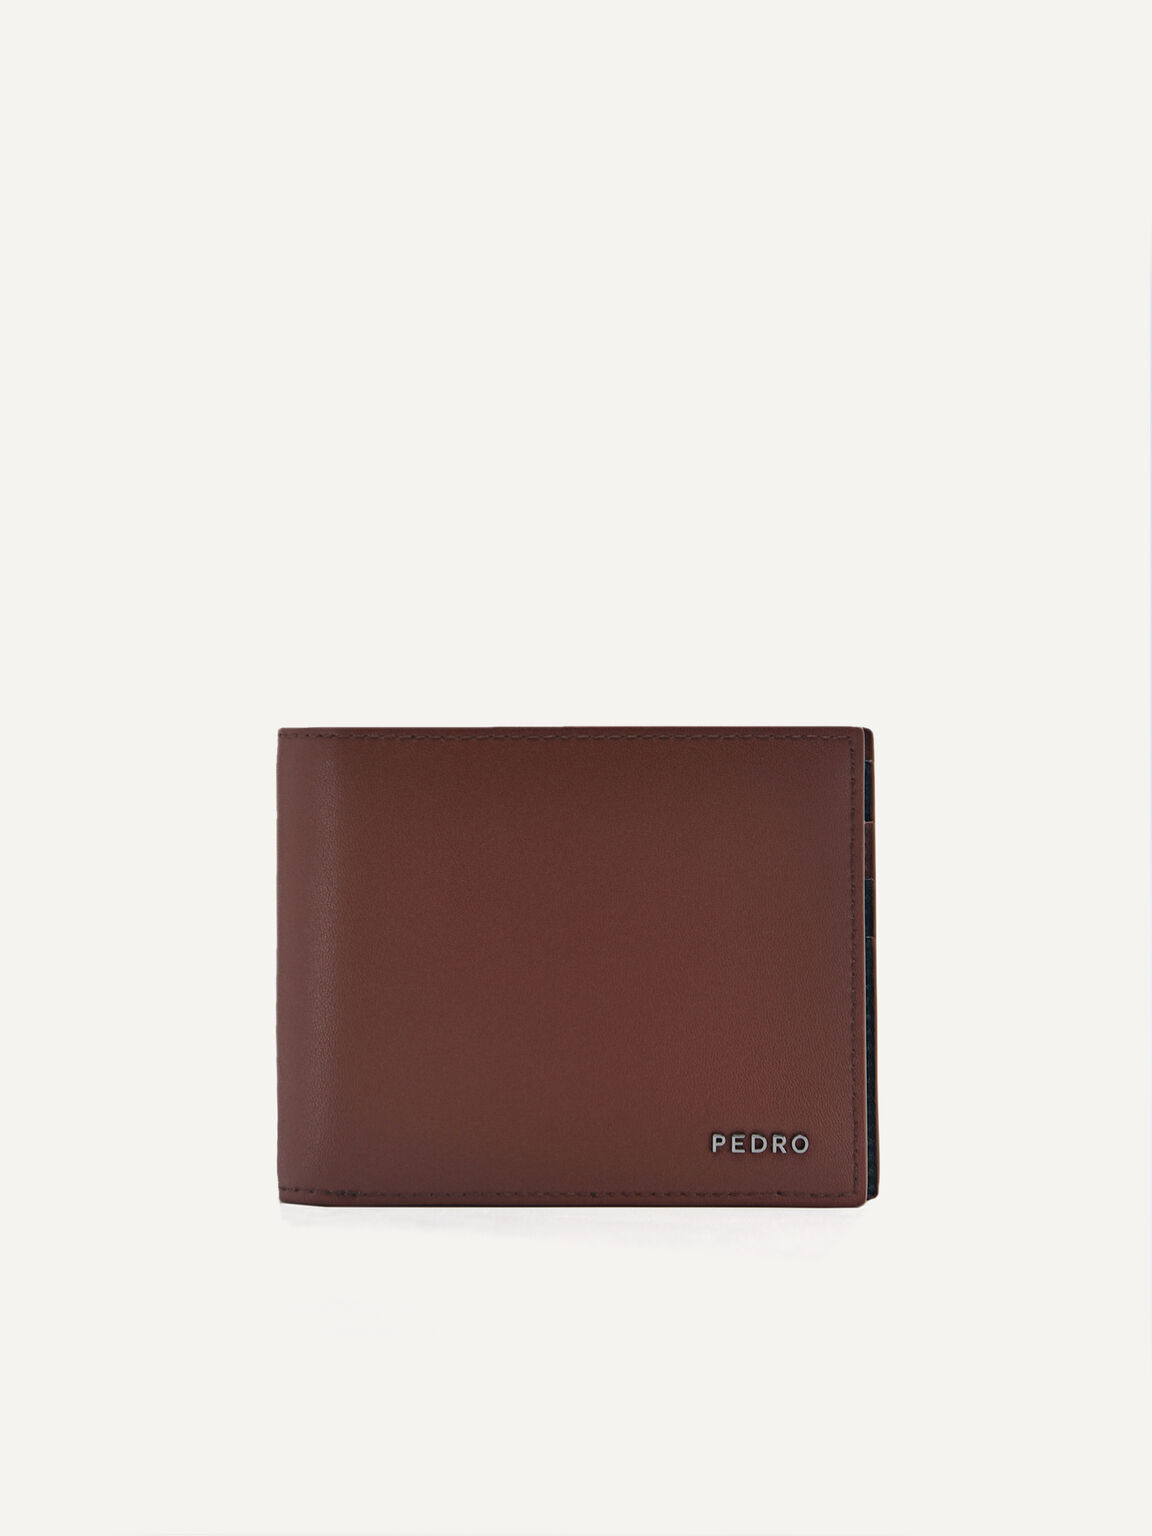 Leather Bi-Fold Wallet, Brown